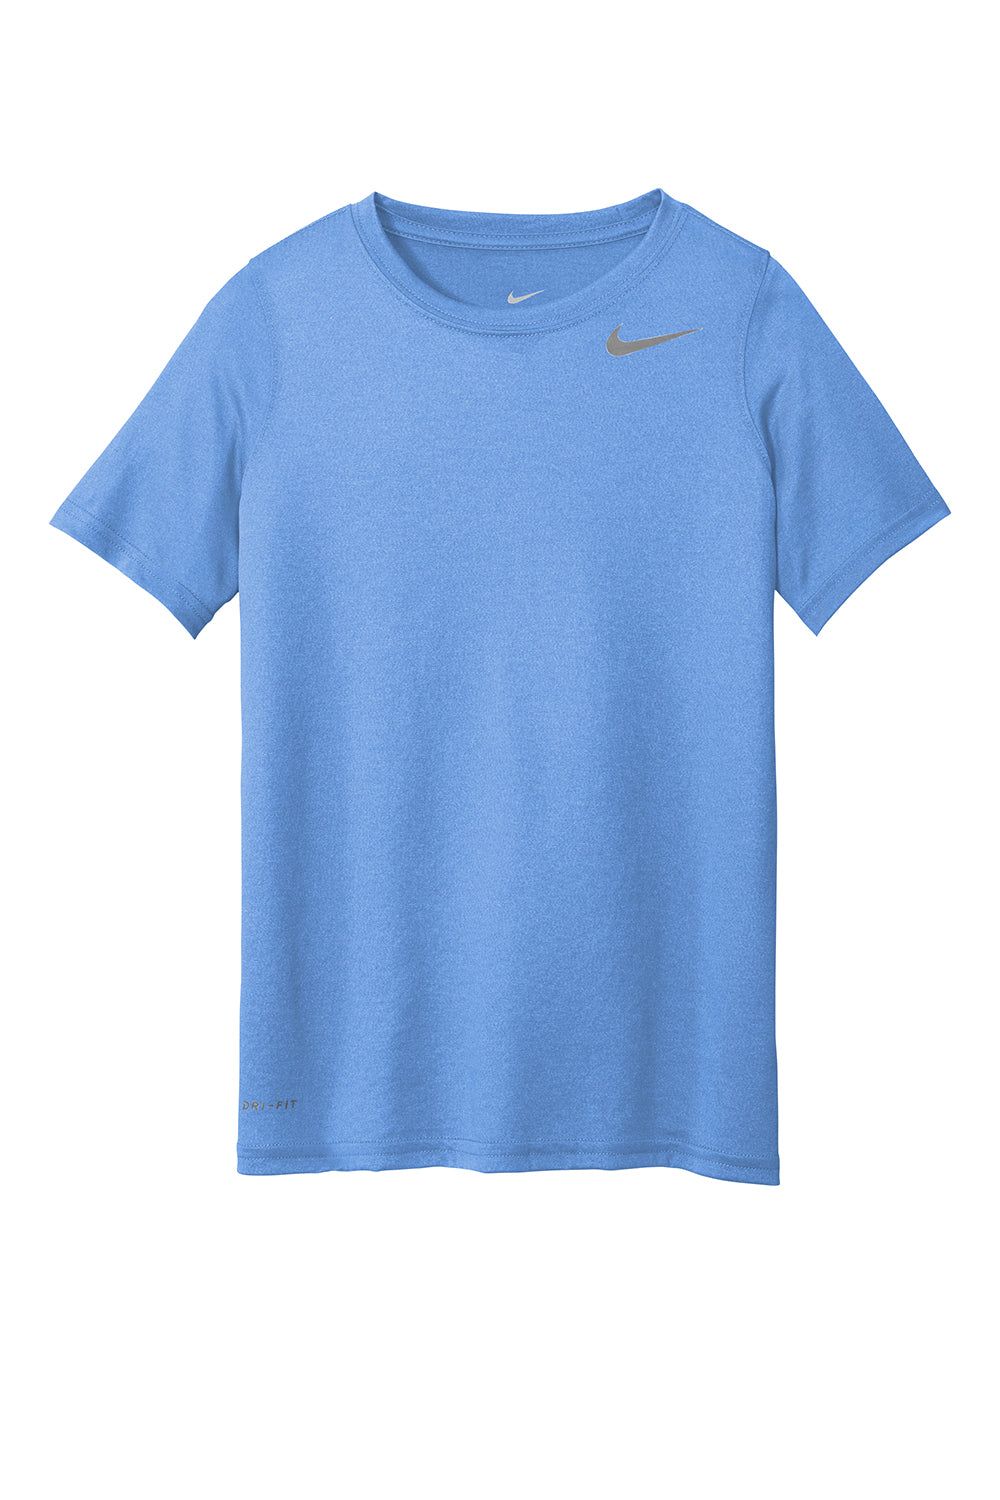 Nike DV7317 Youth Team rLegend Dri-Fit Moisure Wicking Short Sleeve Crewneck T-Shirt Valor Blue Flat Front